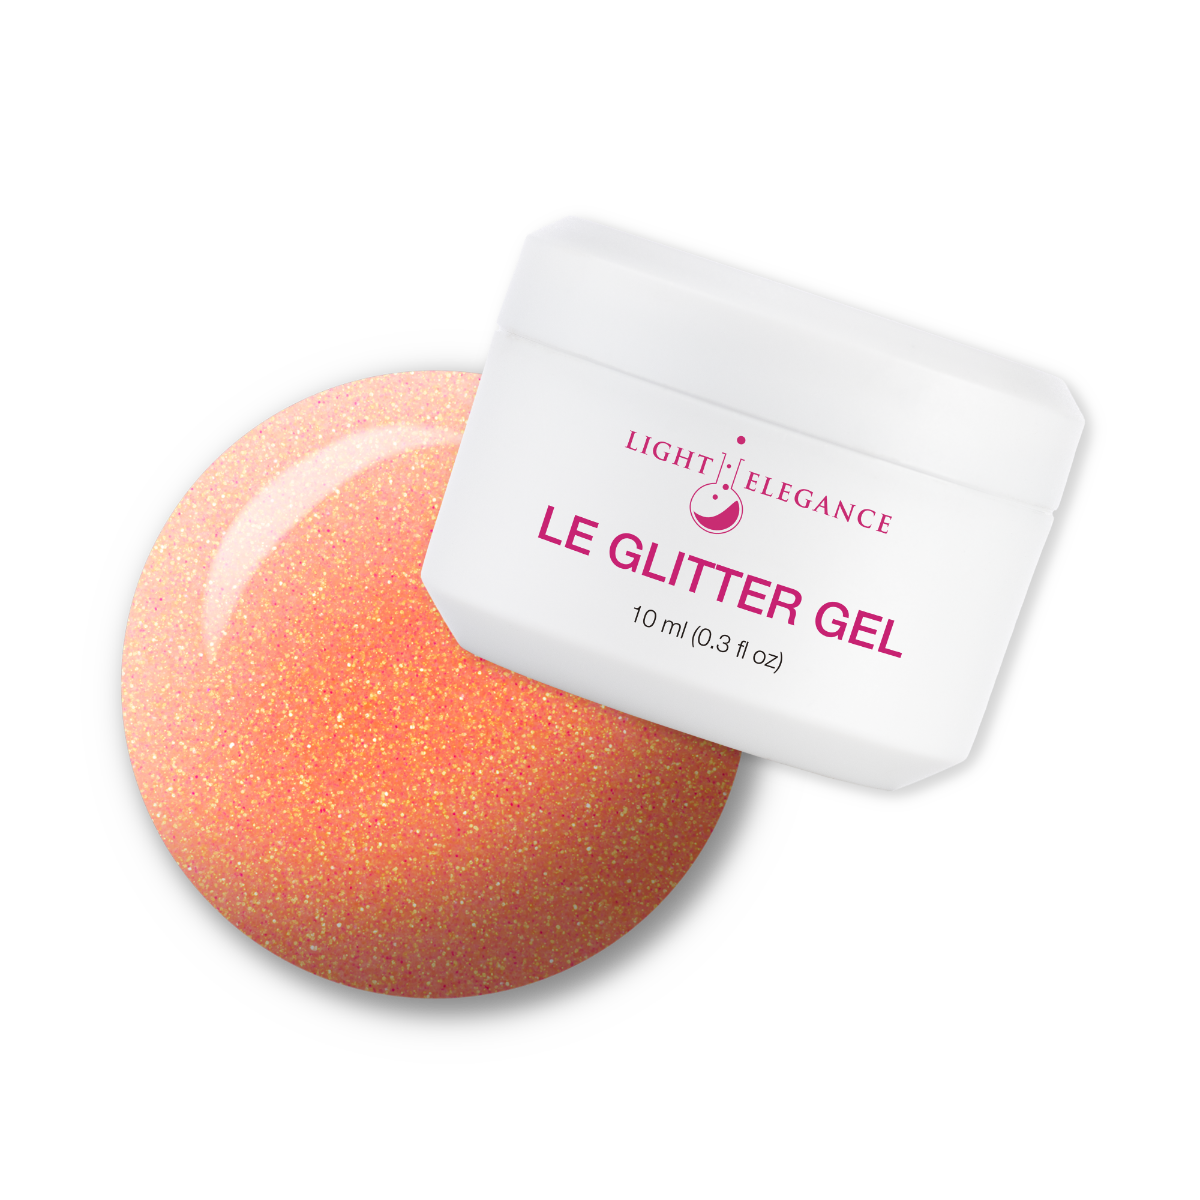 Light Elegance Glitter Gel - Orange Crush :: New Packaging - Creata Beauty - Professional Beauty Products